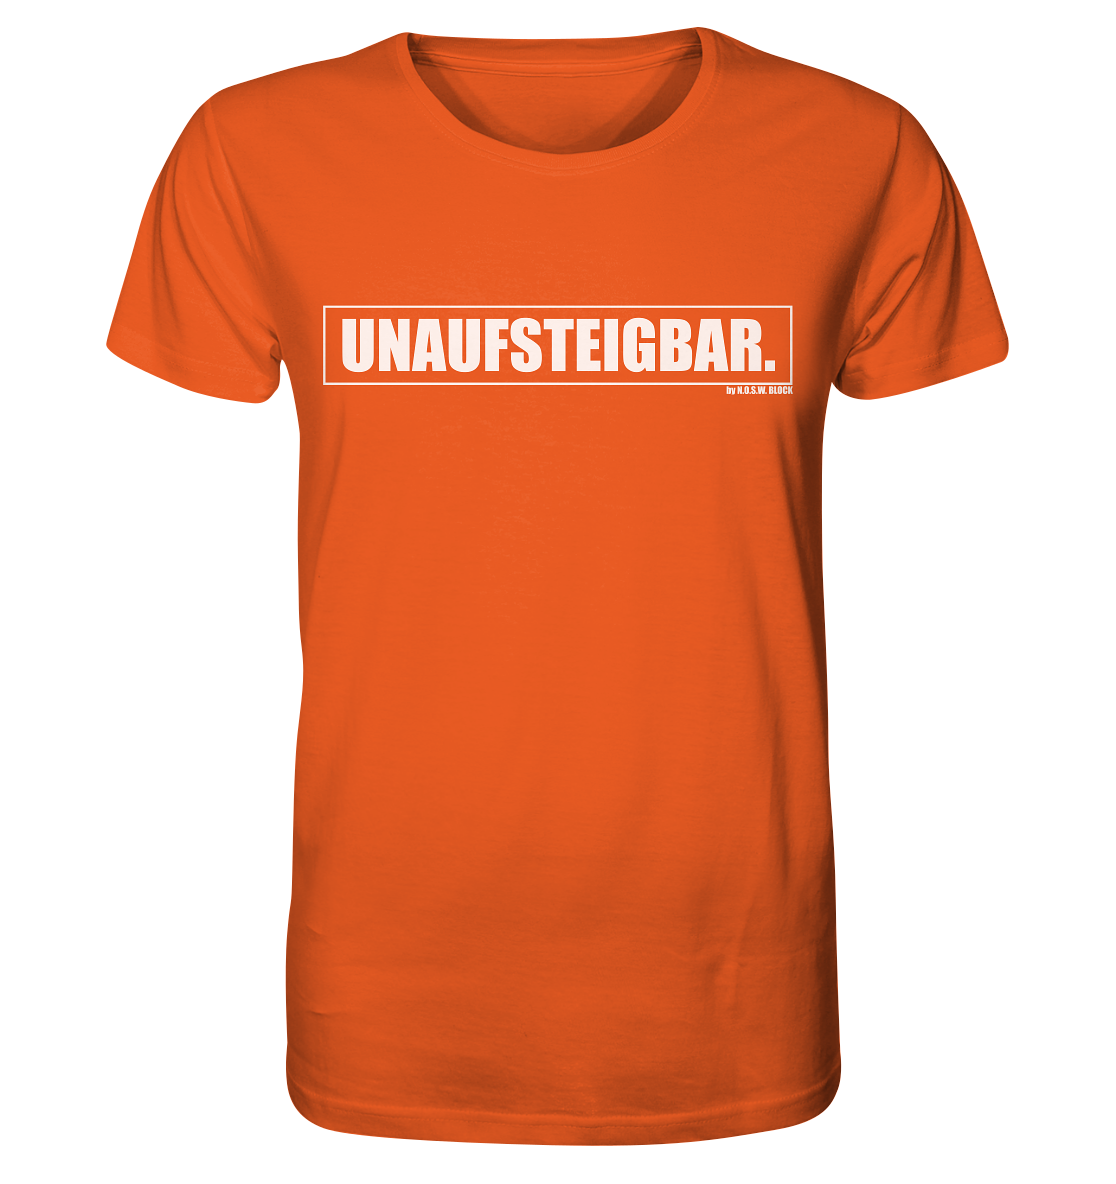 N.O.S.W. BLOCK Fanblock Shirt "UNAUFSTEIGBAR." Männer Organic T-Shirt orange